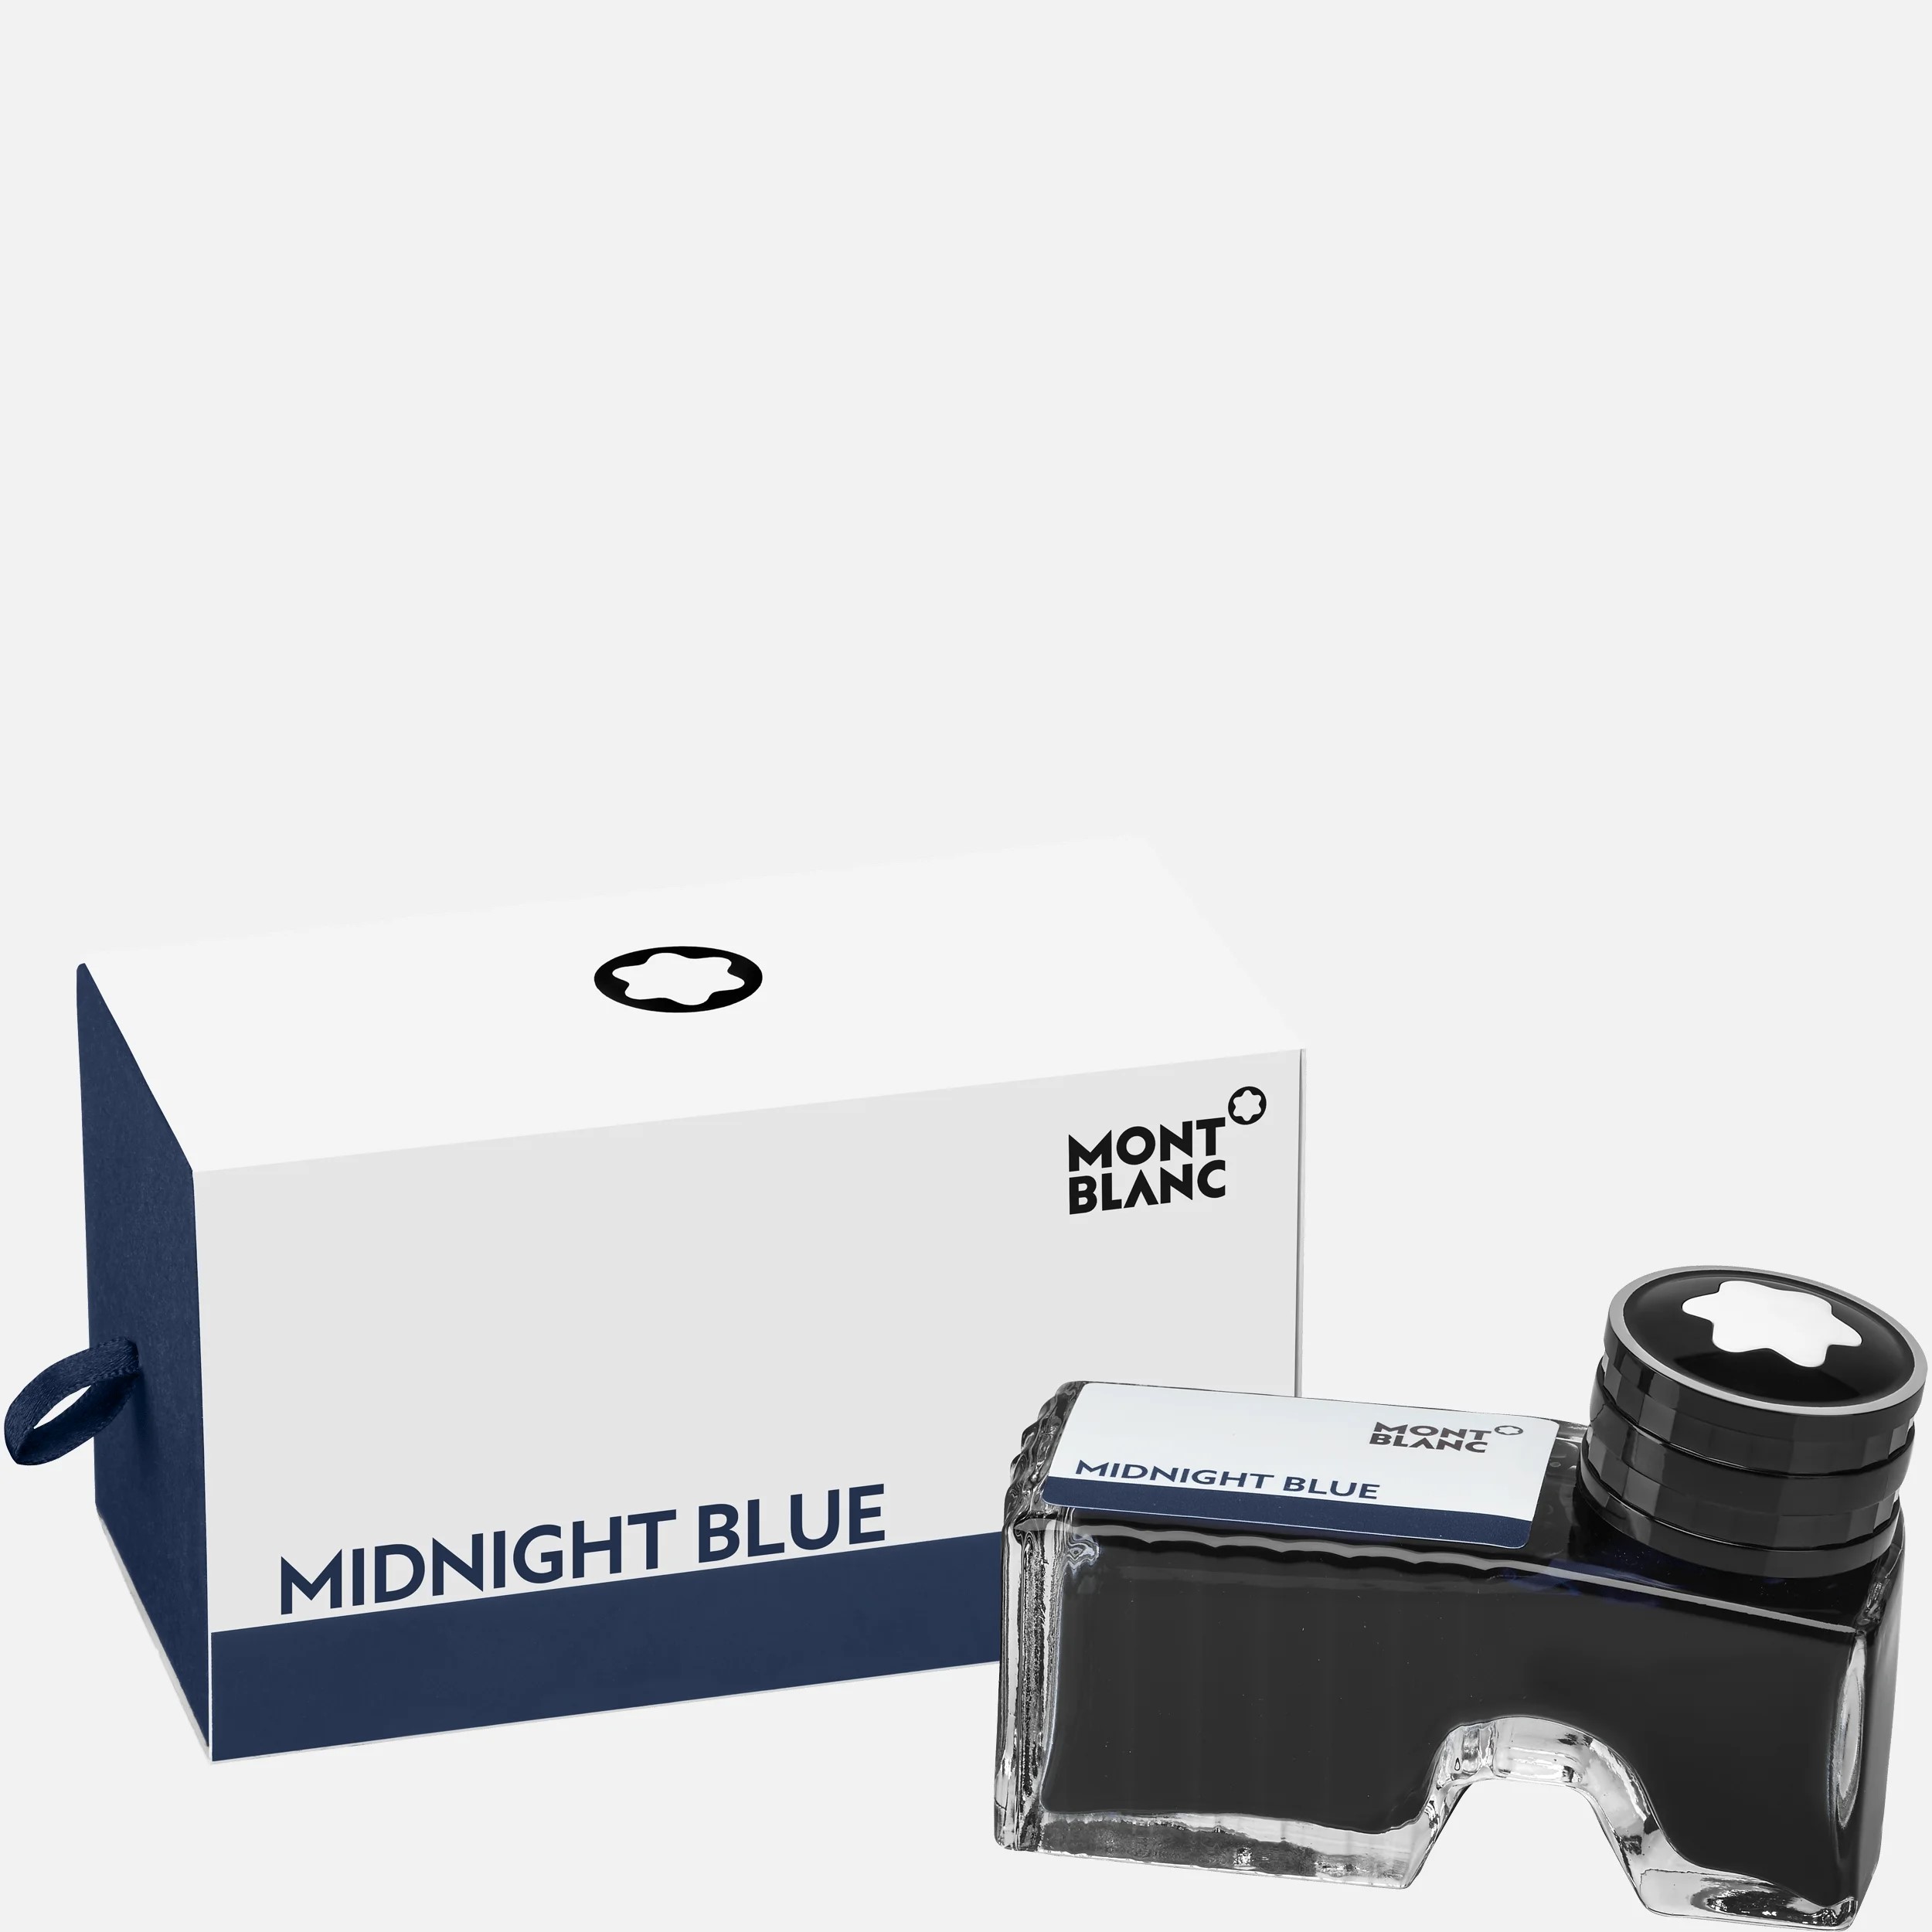 MontBlanc Bottled Ink Midnight Blue 60ml